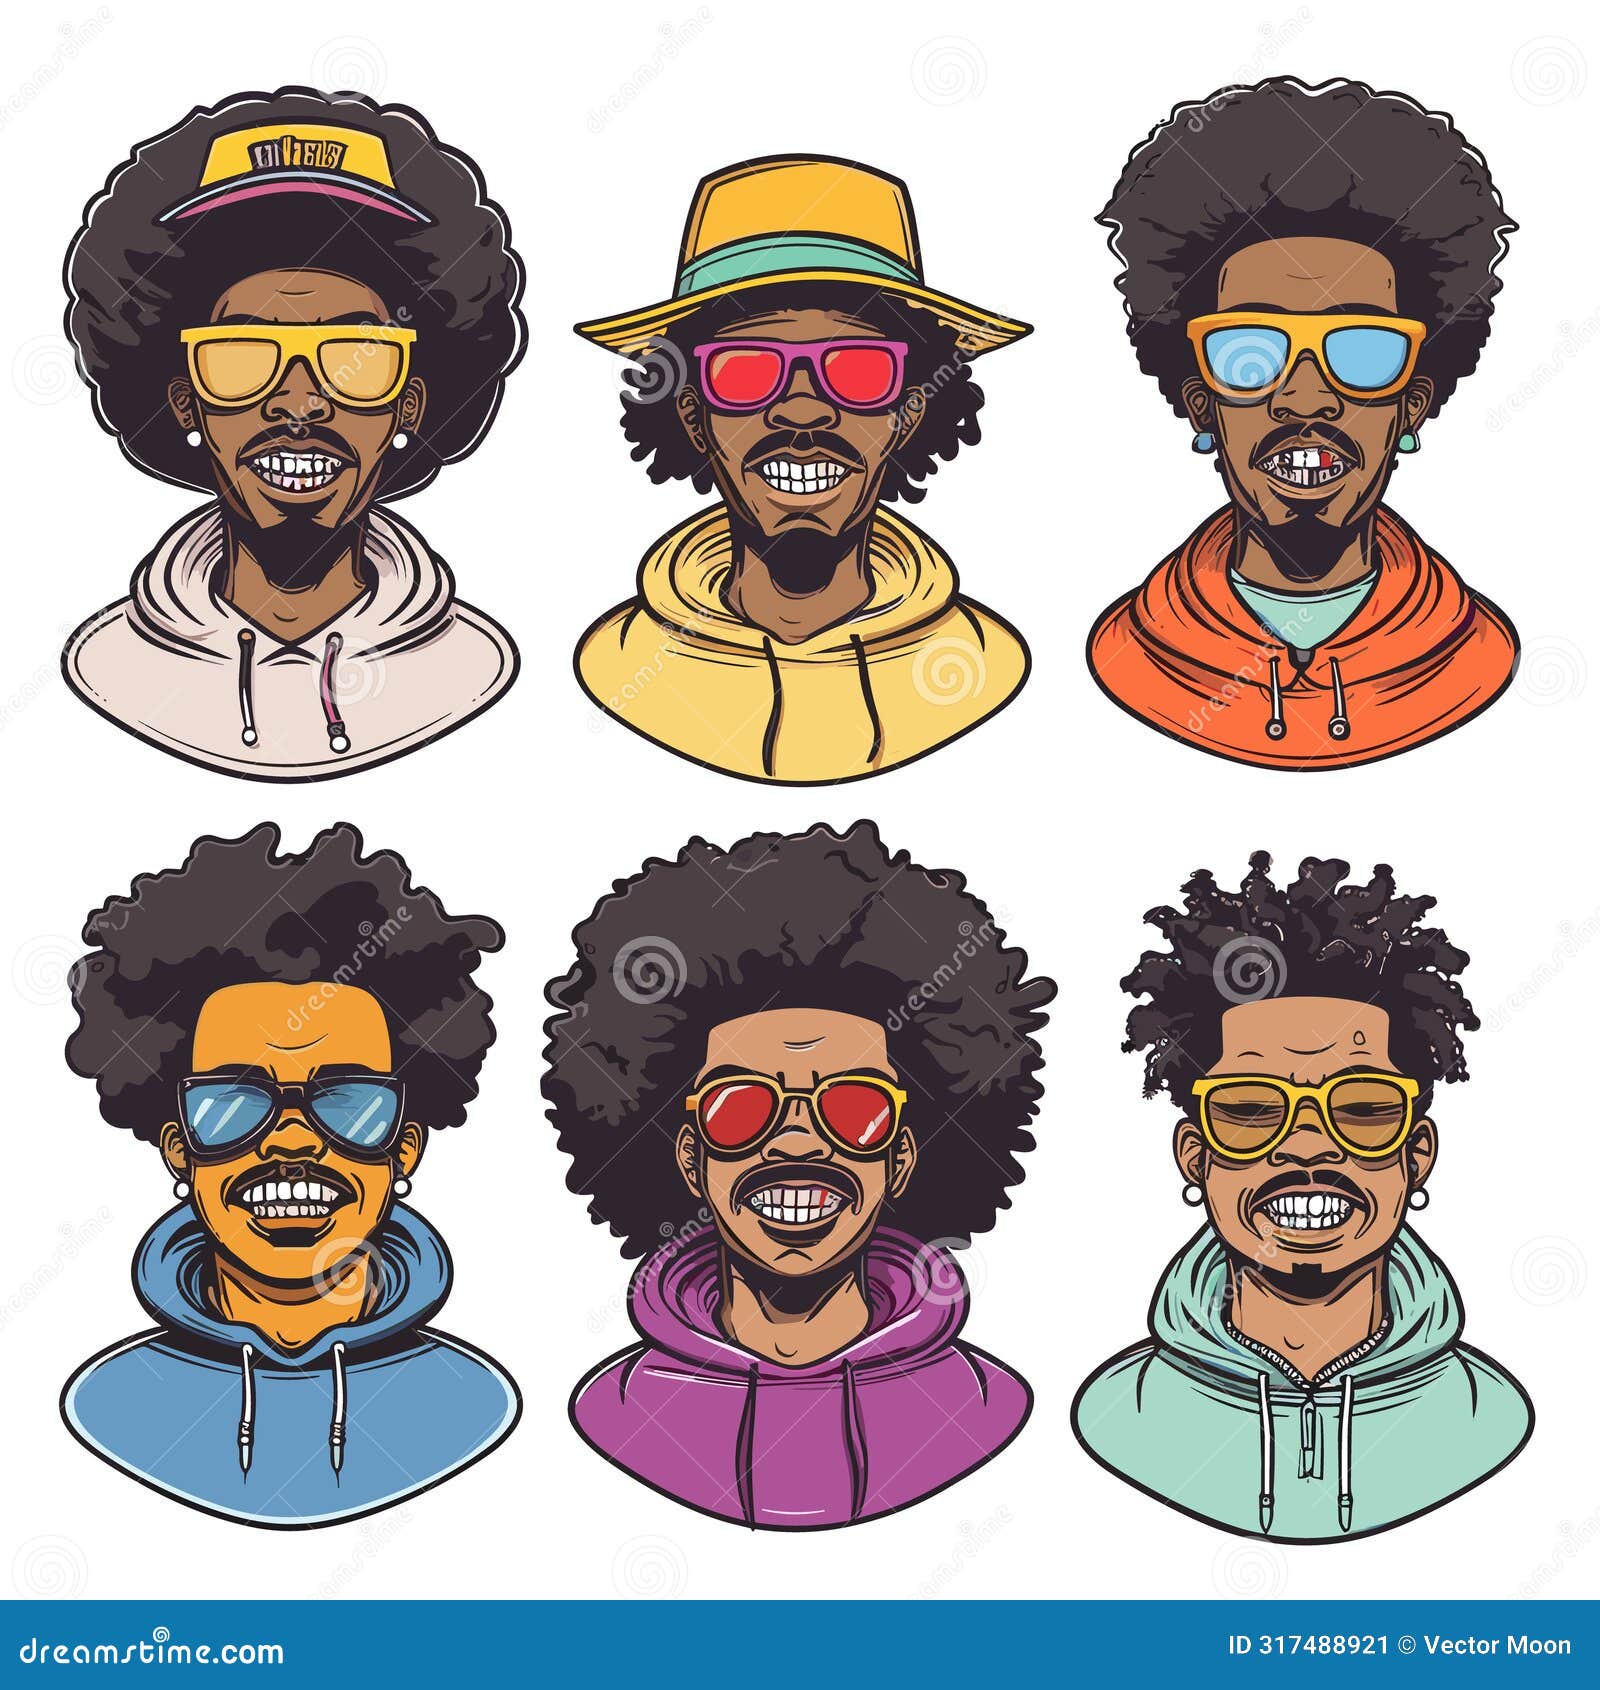 six stylized portraits black men afros wearing various sunglasses colorful clothing, man exhibits